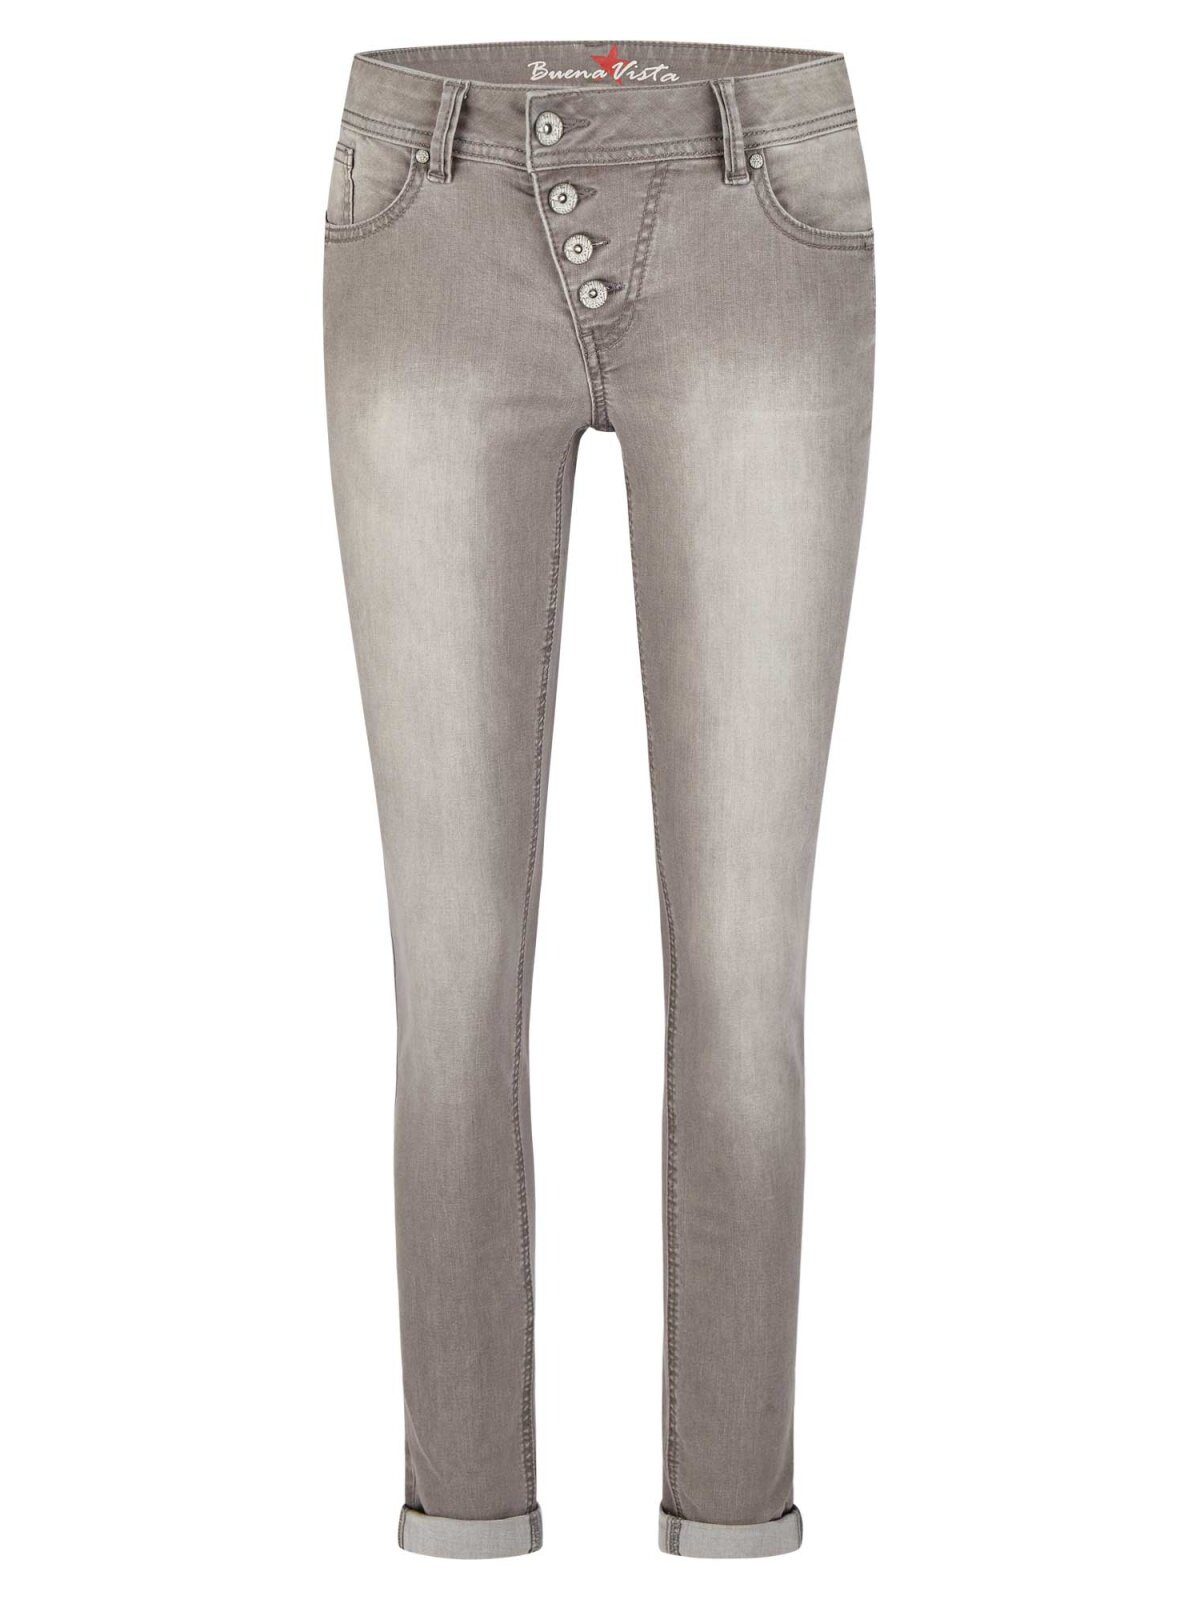 Buena Vista Stretch-Jeans BUENA VISTA MALIBU light grey 2401 B5001 694.4580 - Stretch Denim